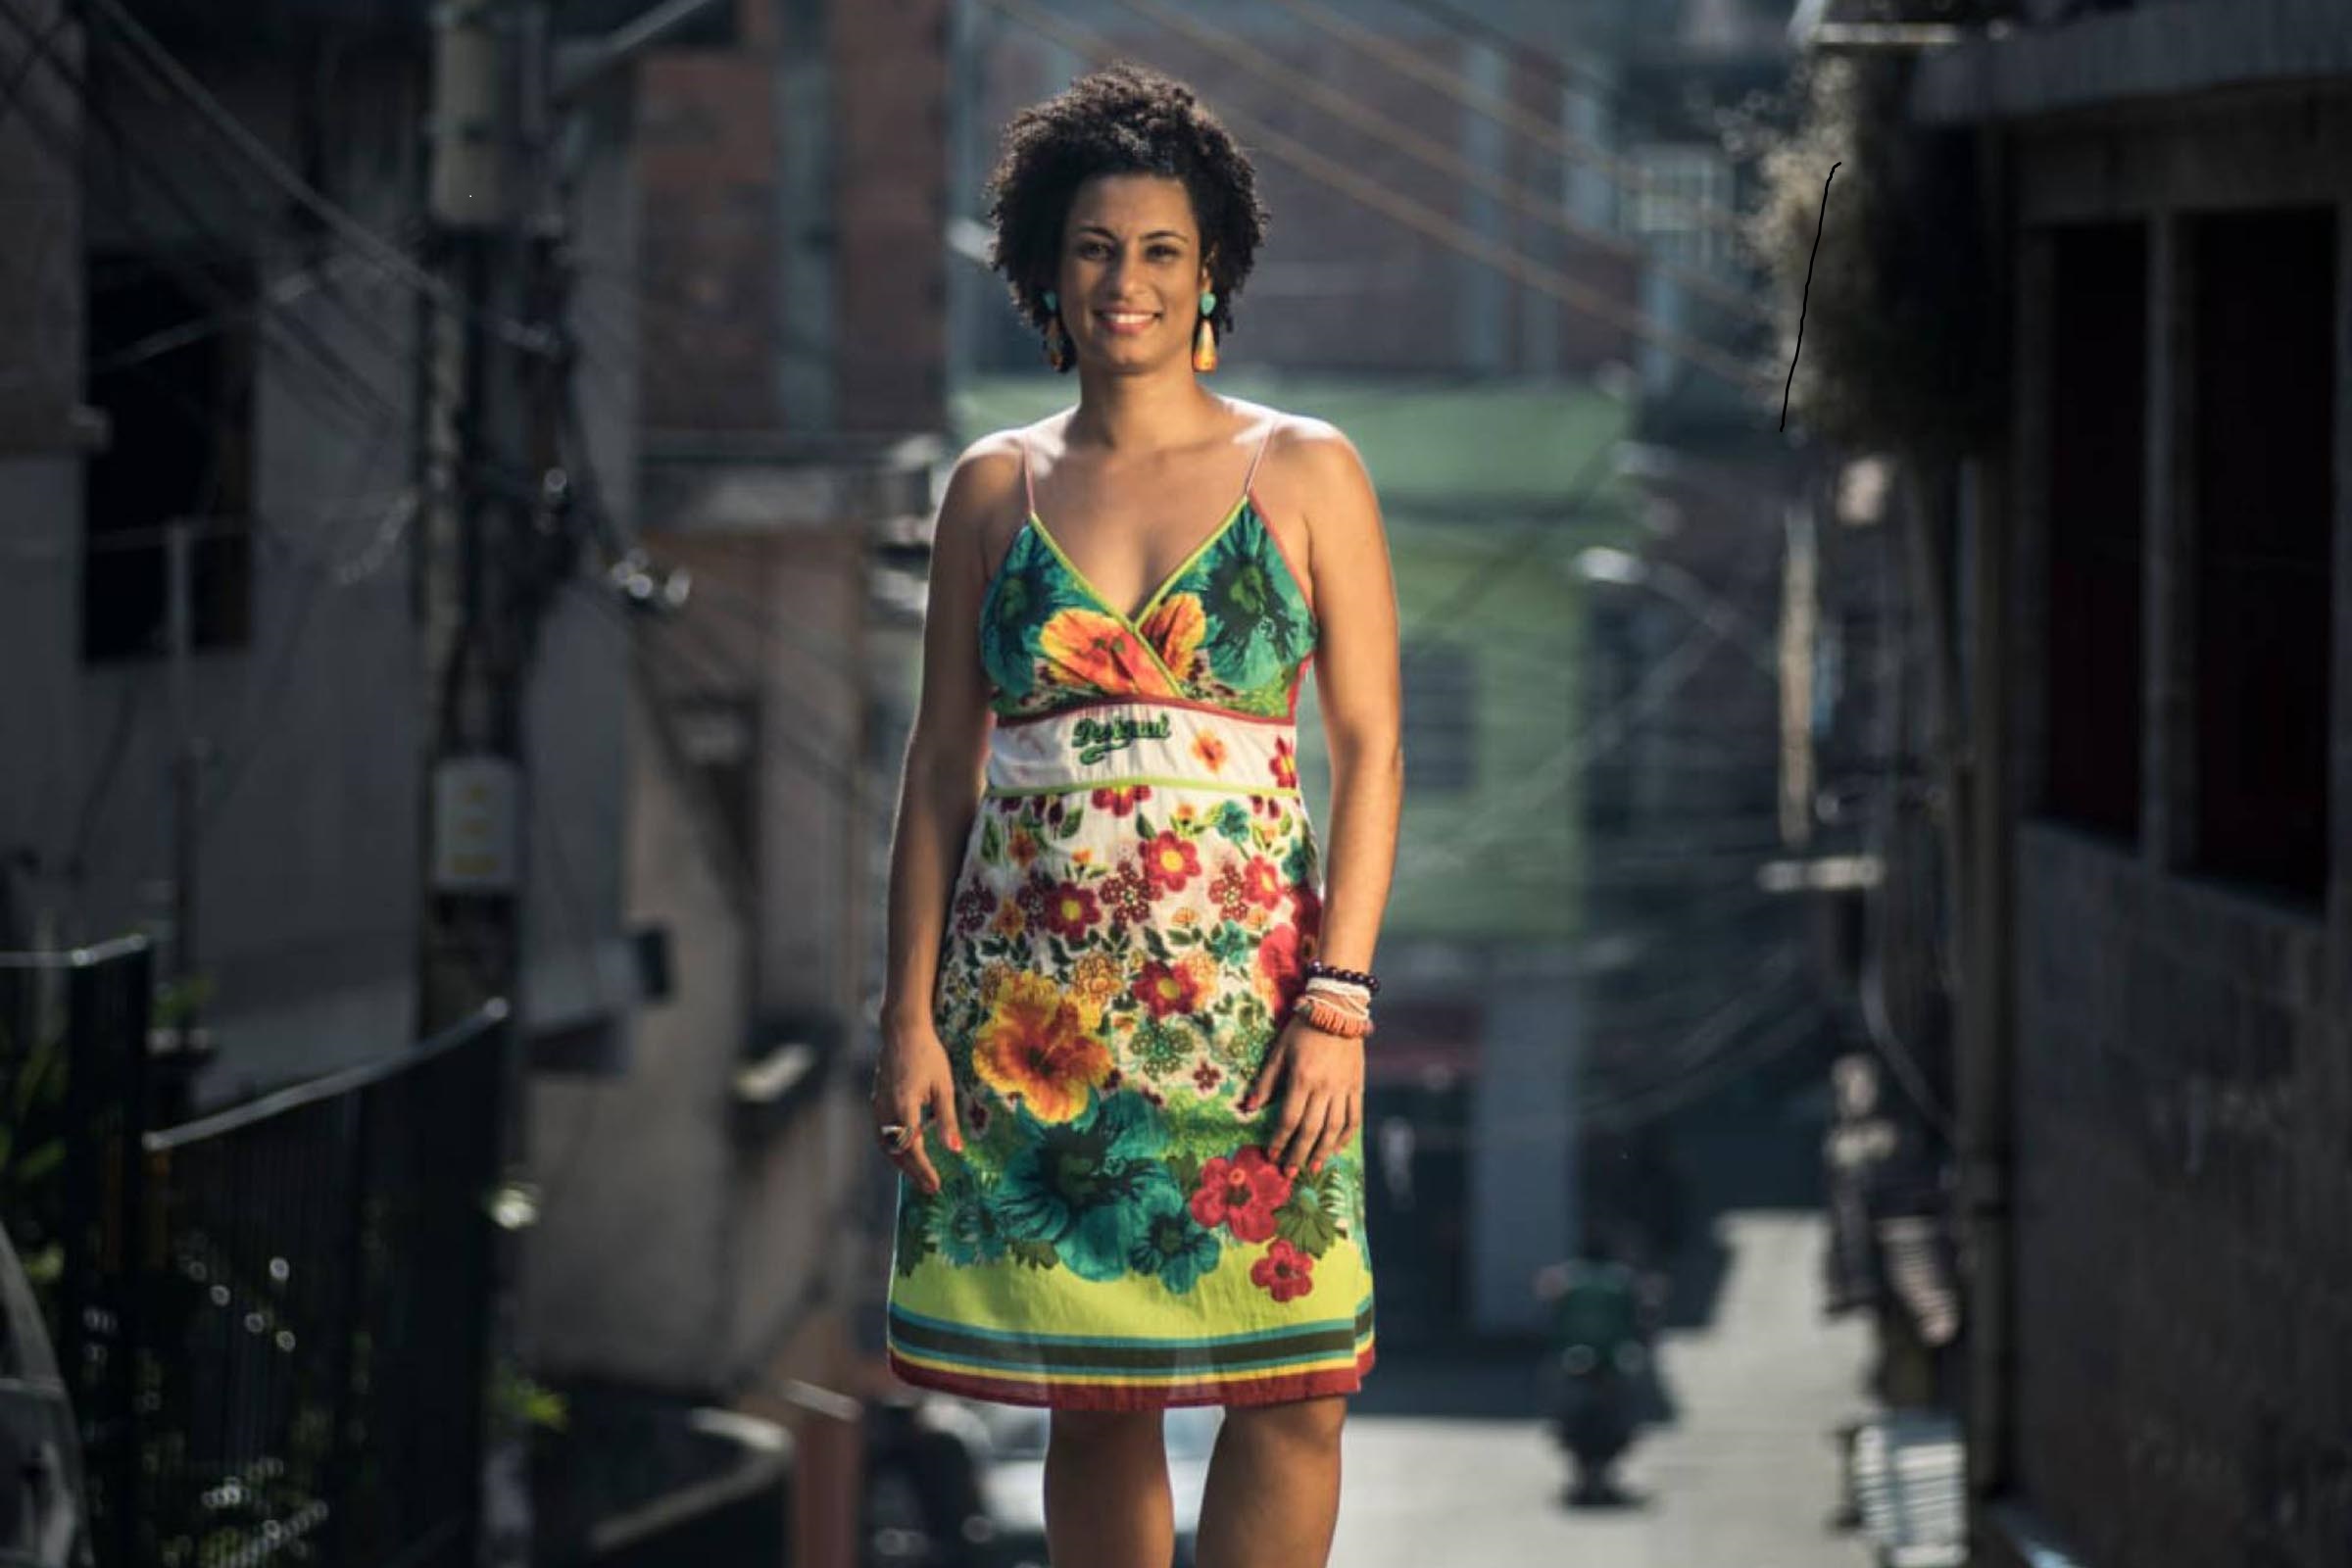 Vereadora Marielle Franco, cria do Complexo da Maré, na Zona Norte da cidade do Rio de Janeiro. Foto: Reprodução Facebook Marielle Franco